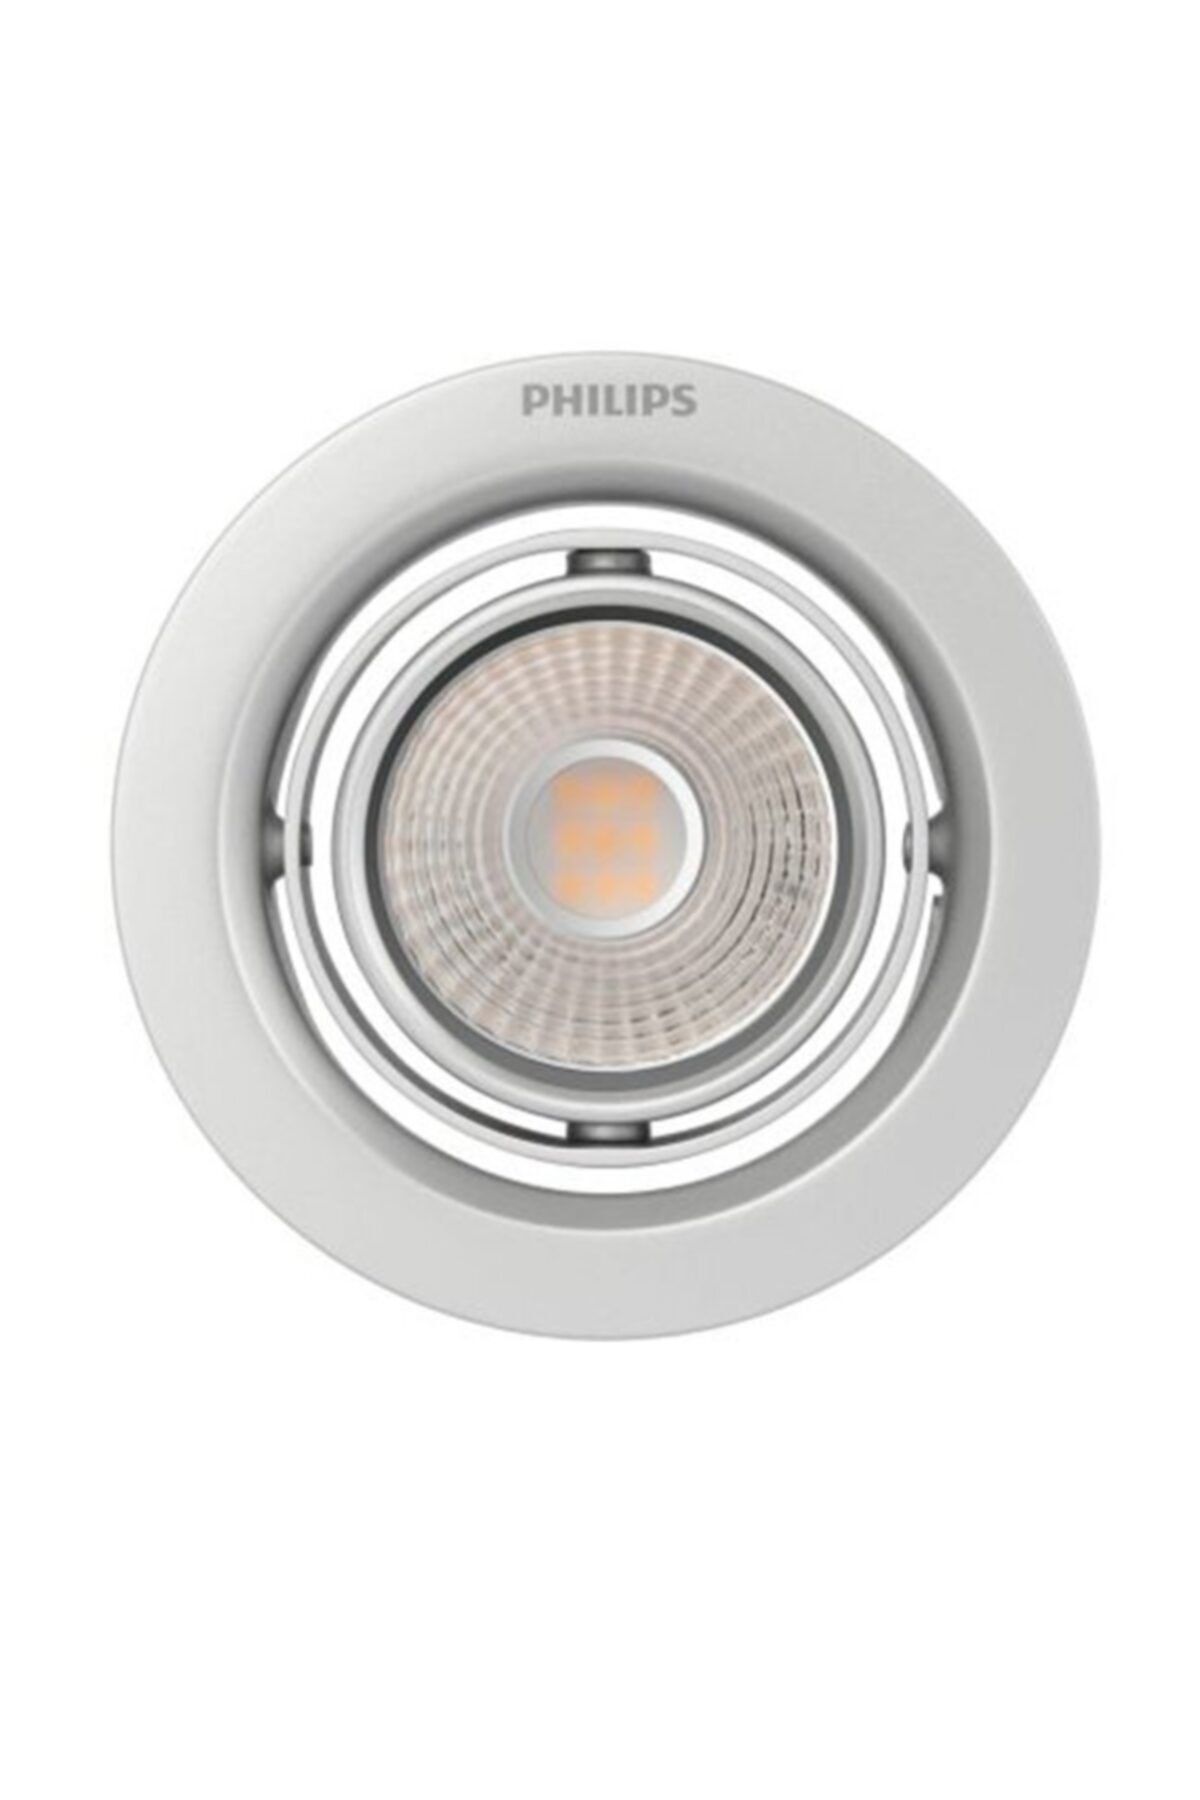 Philips 7w Sıva Altı Yuvarlak 2700k Gümüş Kasa Led Spot Armatür